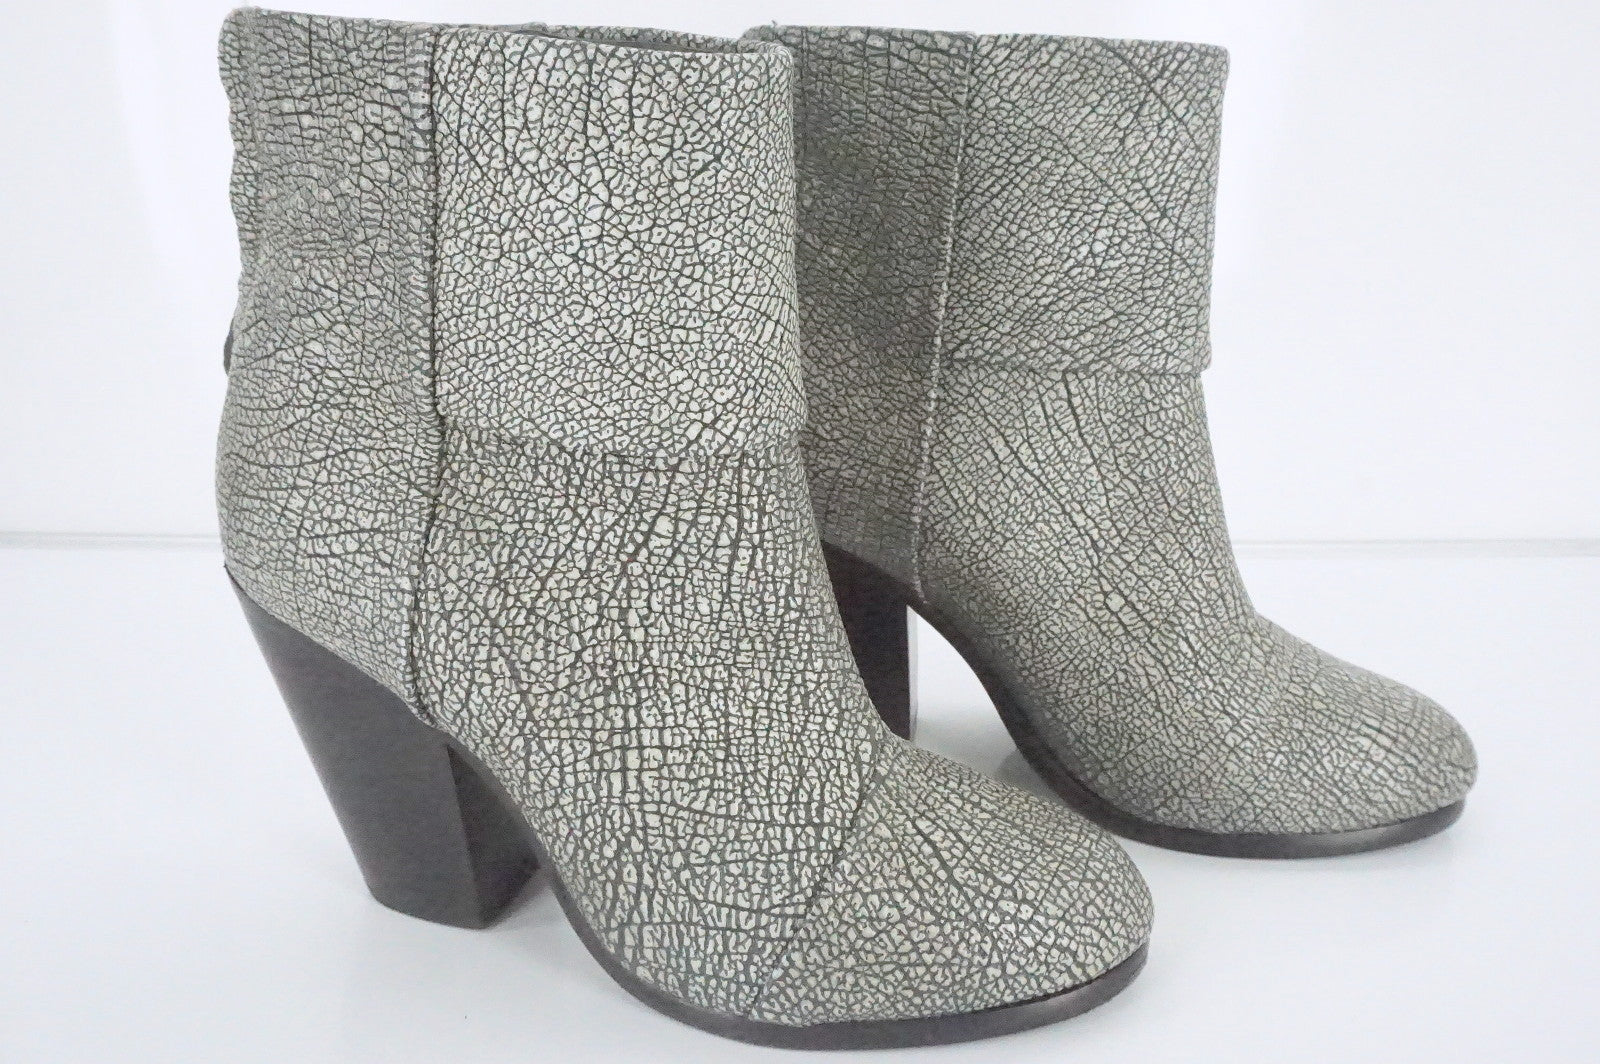 Rag & Bone Grey Textured Leather Newbury Ankle Boots Size 35 NIB Cap Toe $495